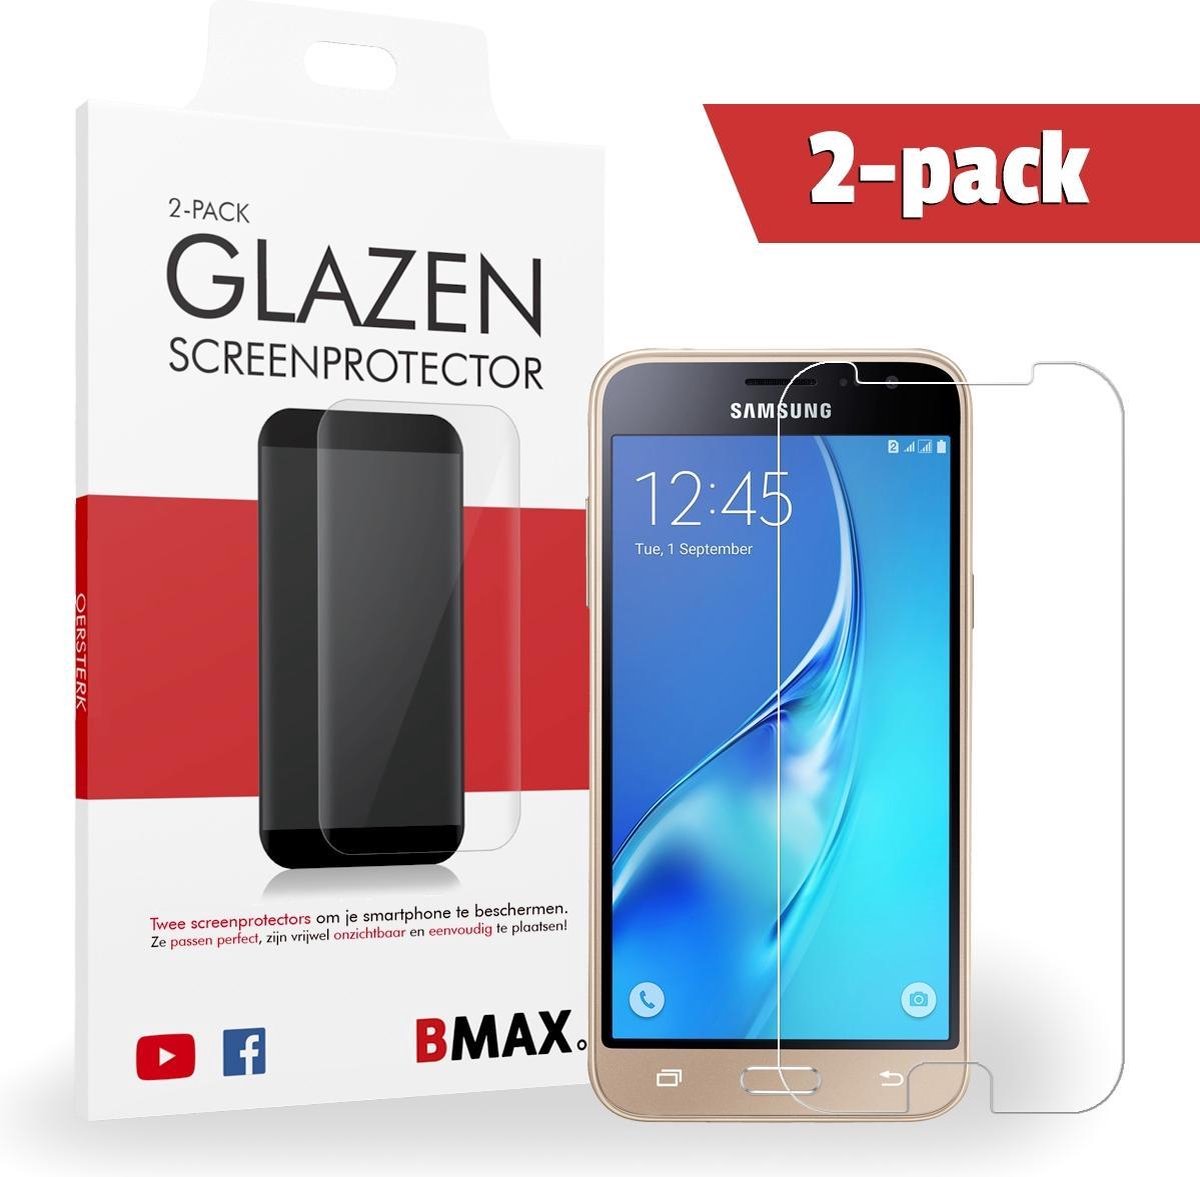 2-pack Bmax Samsung Galaxy J3 2016 Screenprotector - Glass - 2.5d